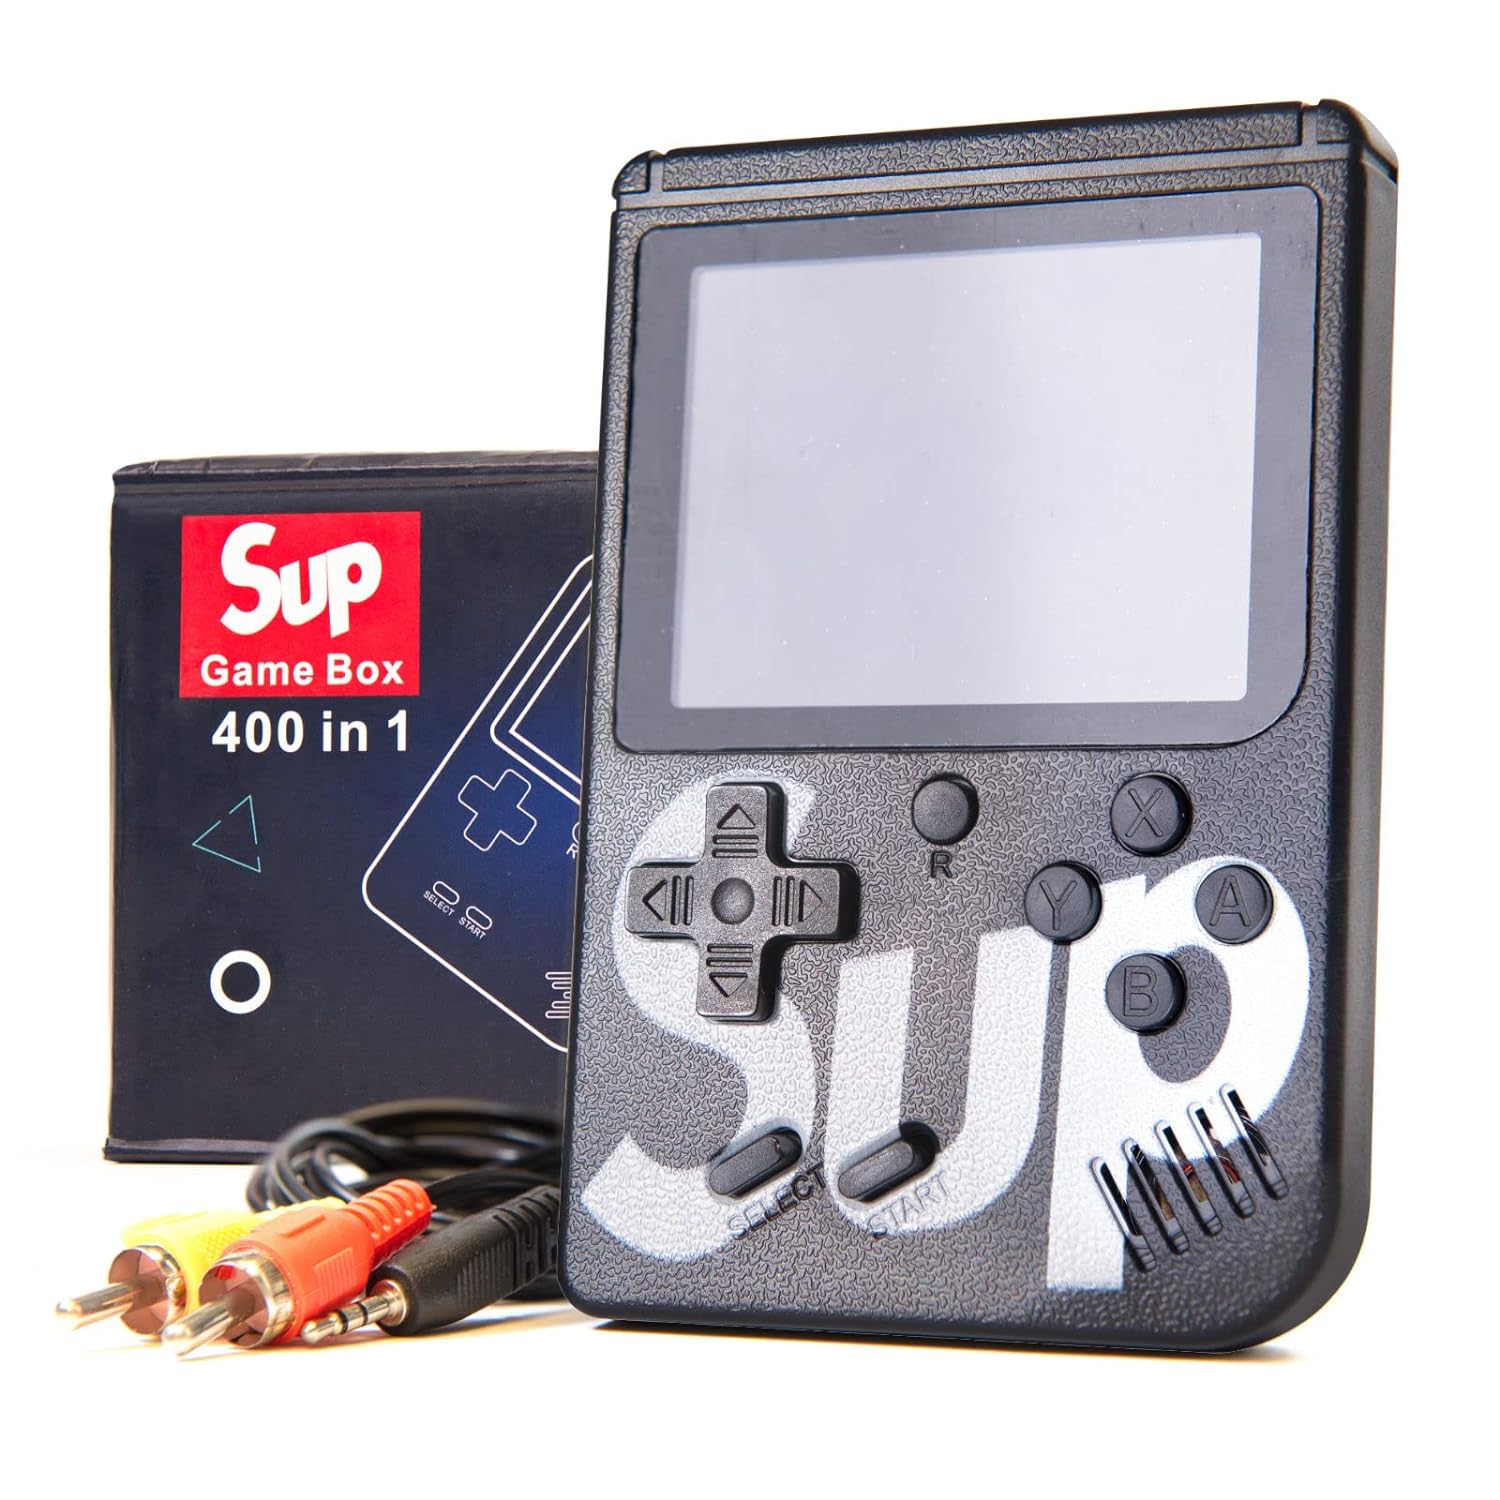 Sup Game Box 400 in1 Fun Video Game Box (Inbuilt-display)